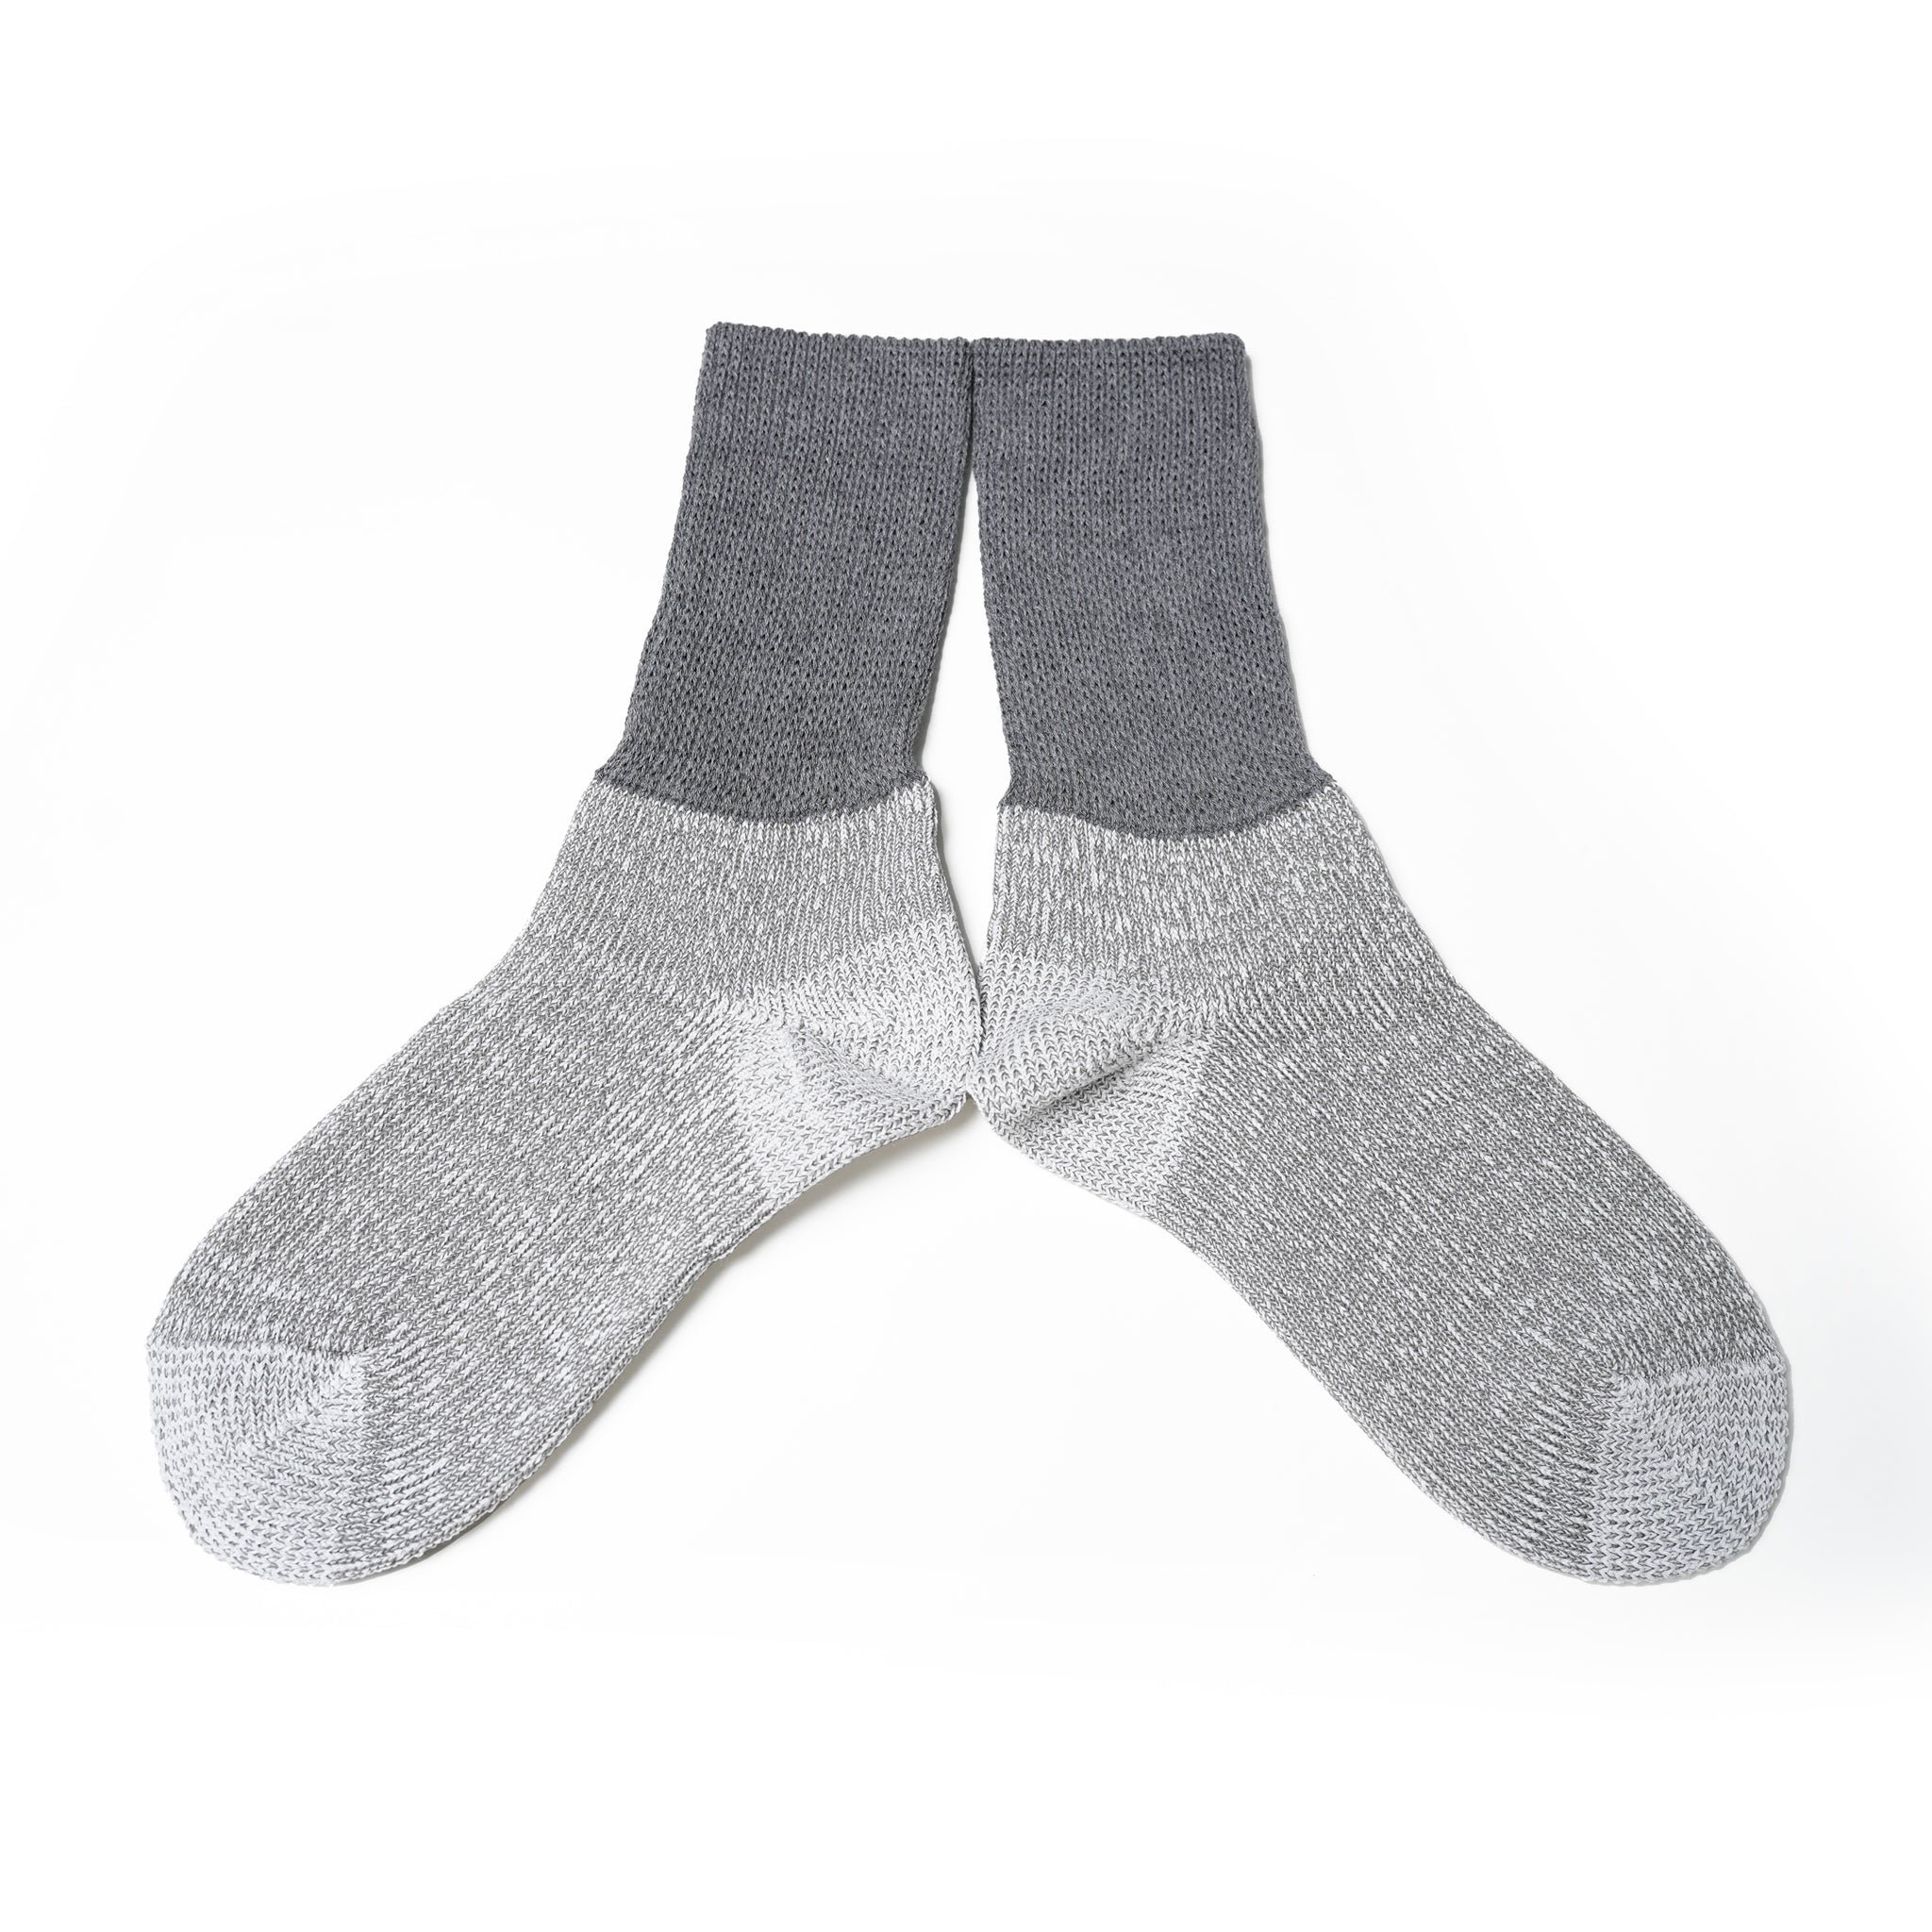 Name:CHUCK Socks| Color:Navy/Sand Beige/Gray| Size:Free 【CATTA_カッタ】【ネコポス選択可能】